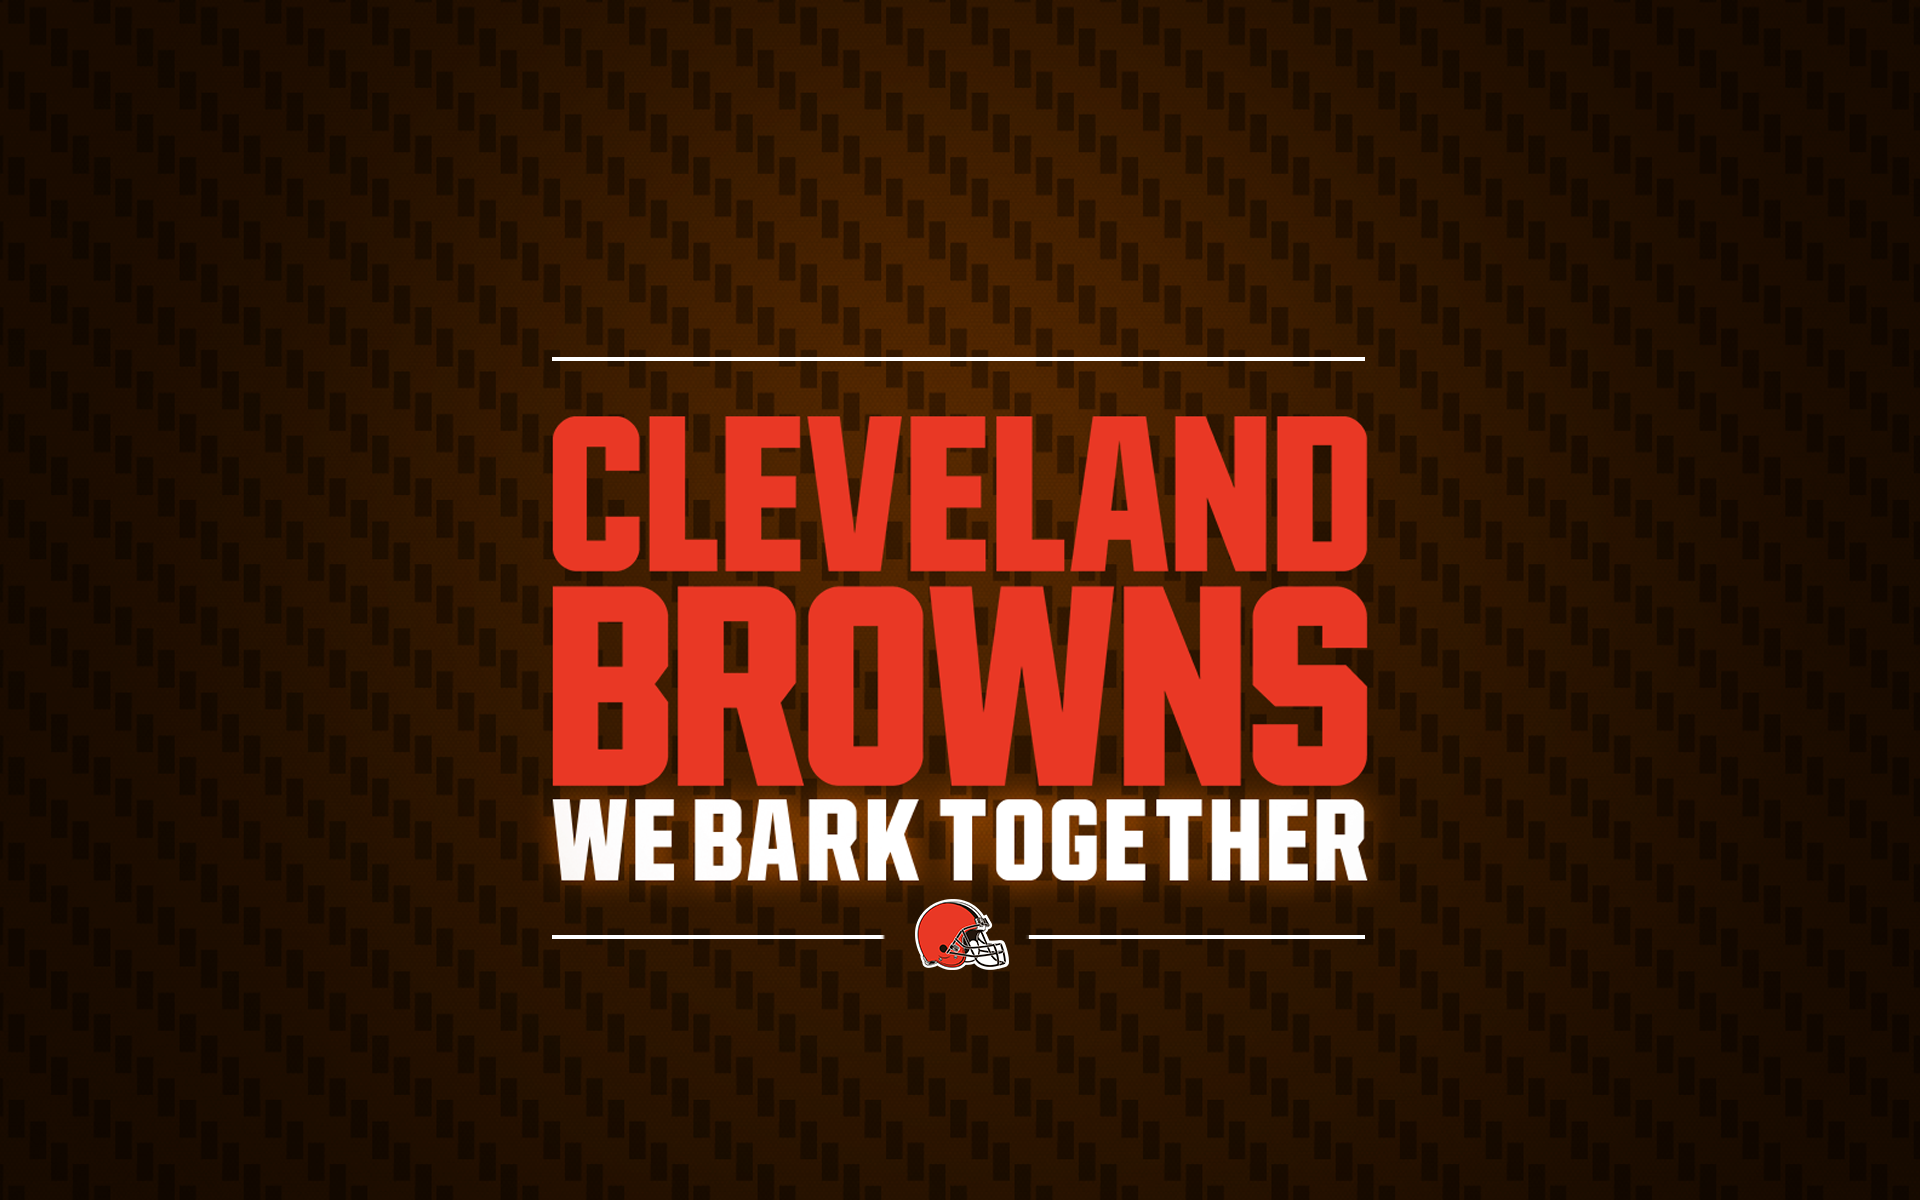 Cleveland browns wallpaper